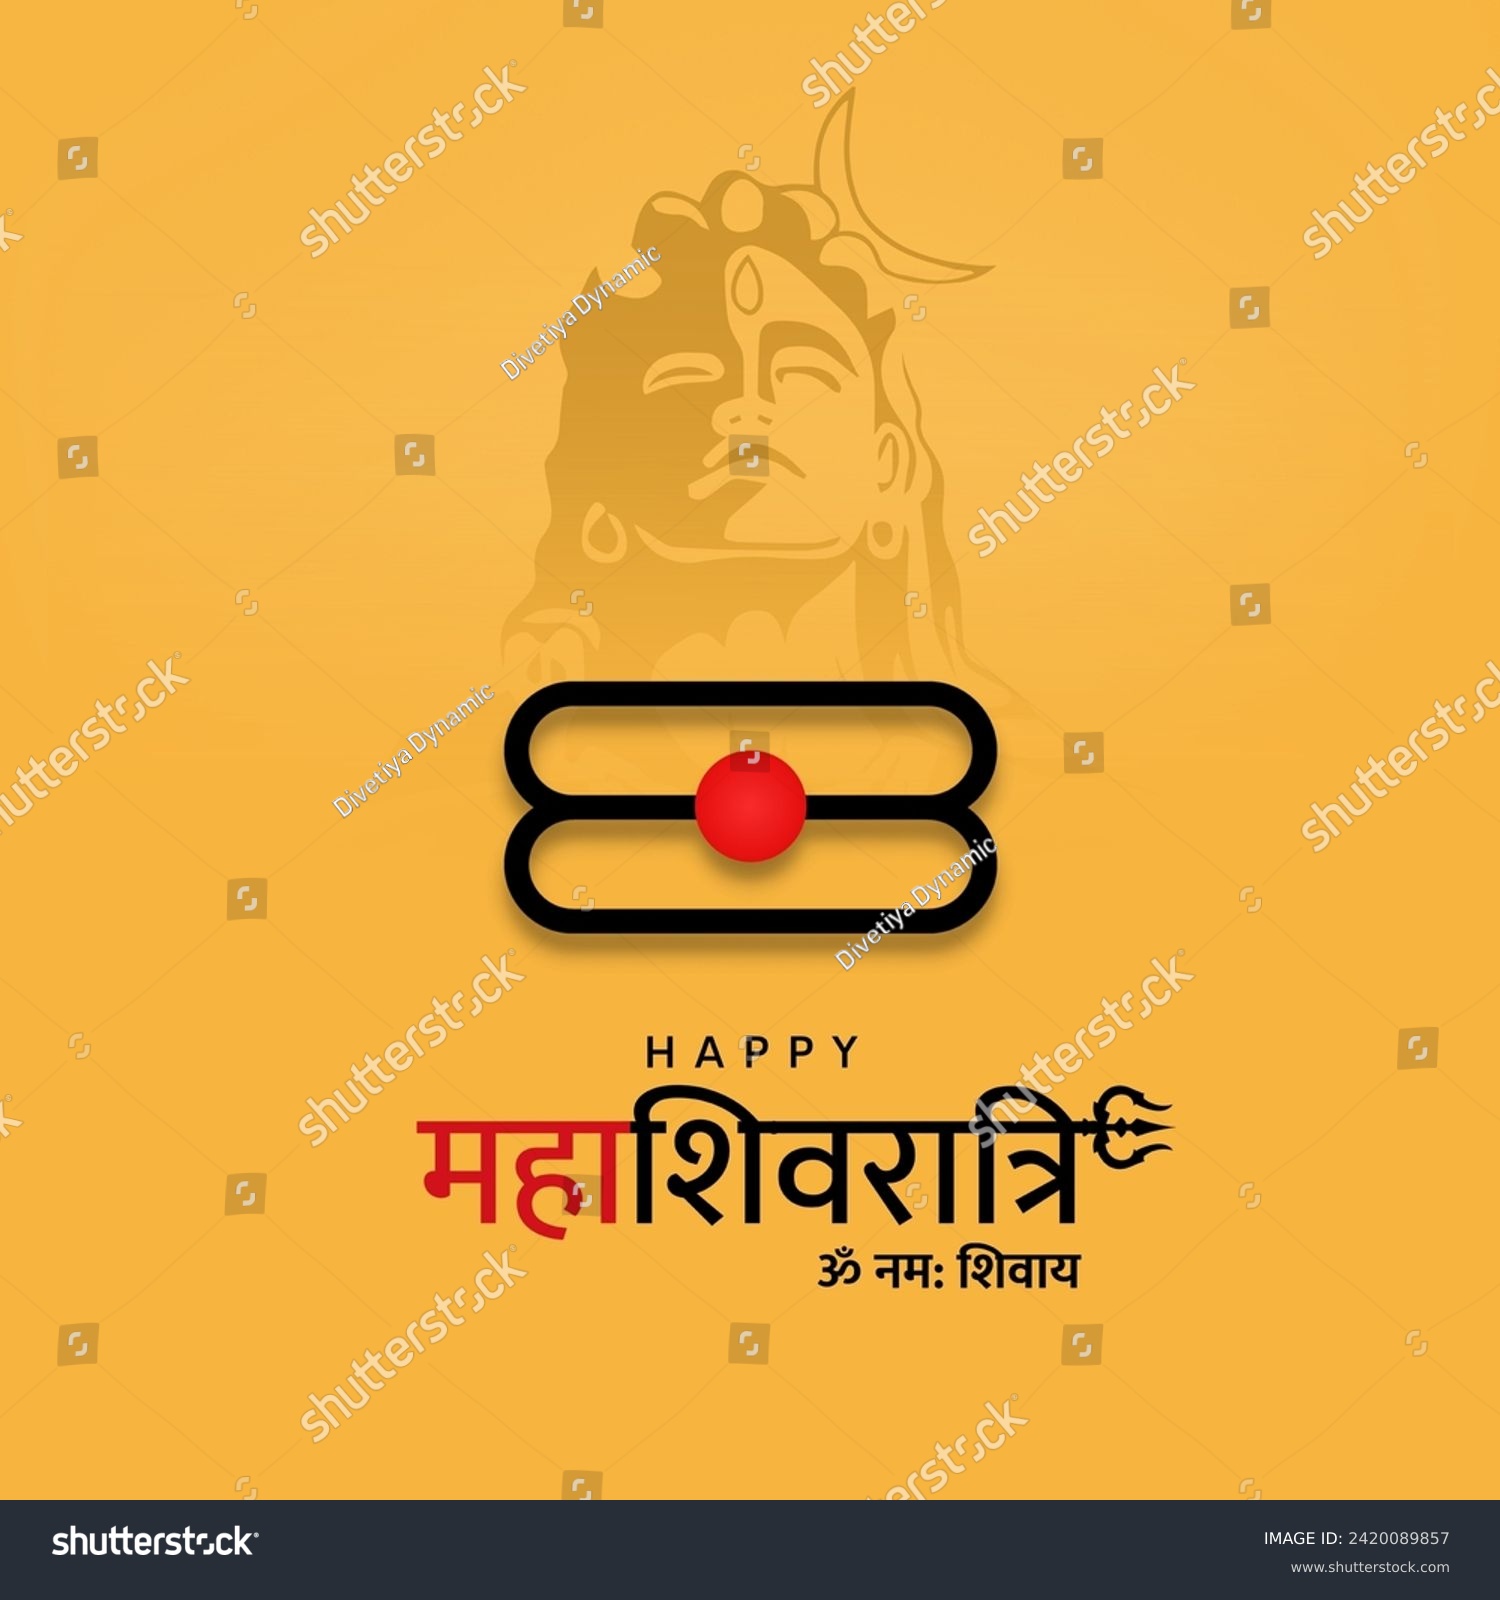 SVG of Creative vector illustration of Hindu Religion Happy Maha Shivratri Festival on yellow background. Hindi text meaning Maha Shivratri and Om Namah Shivaya. svg